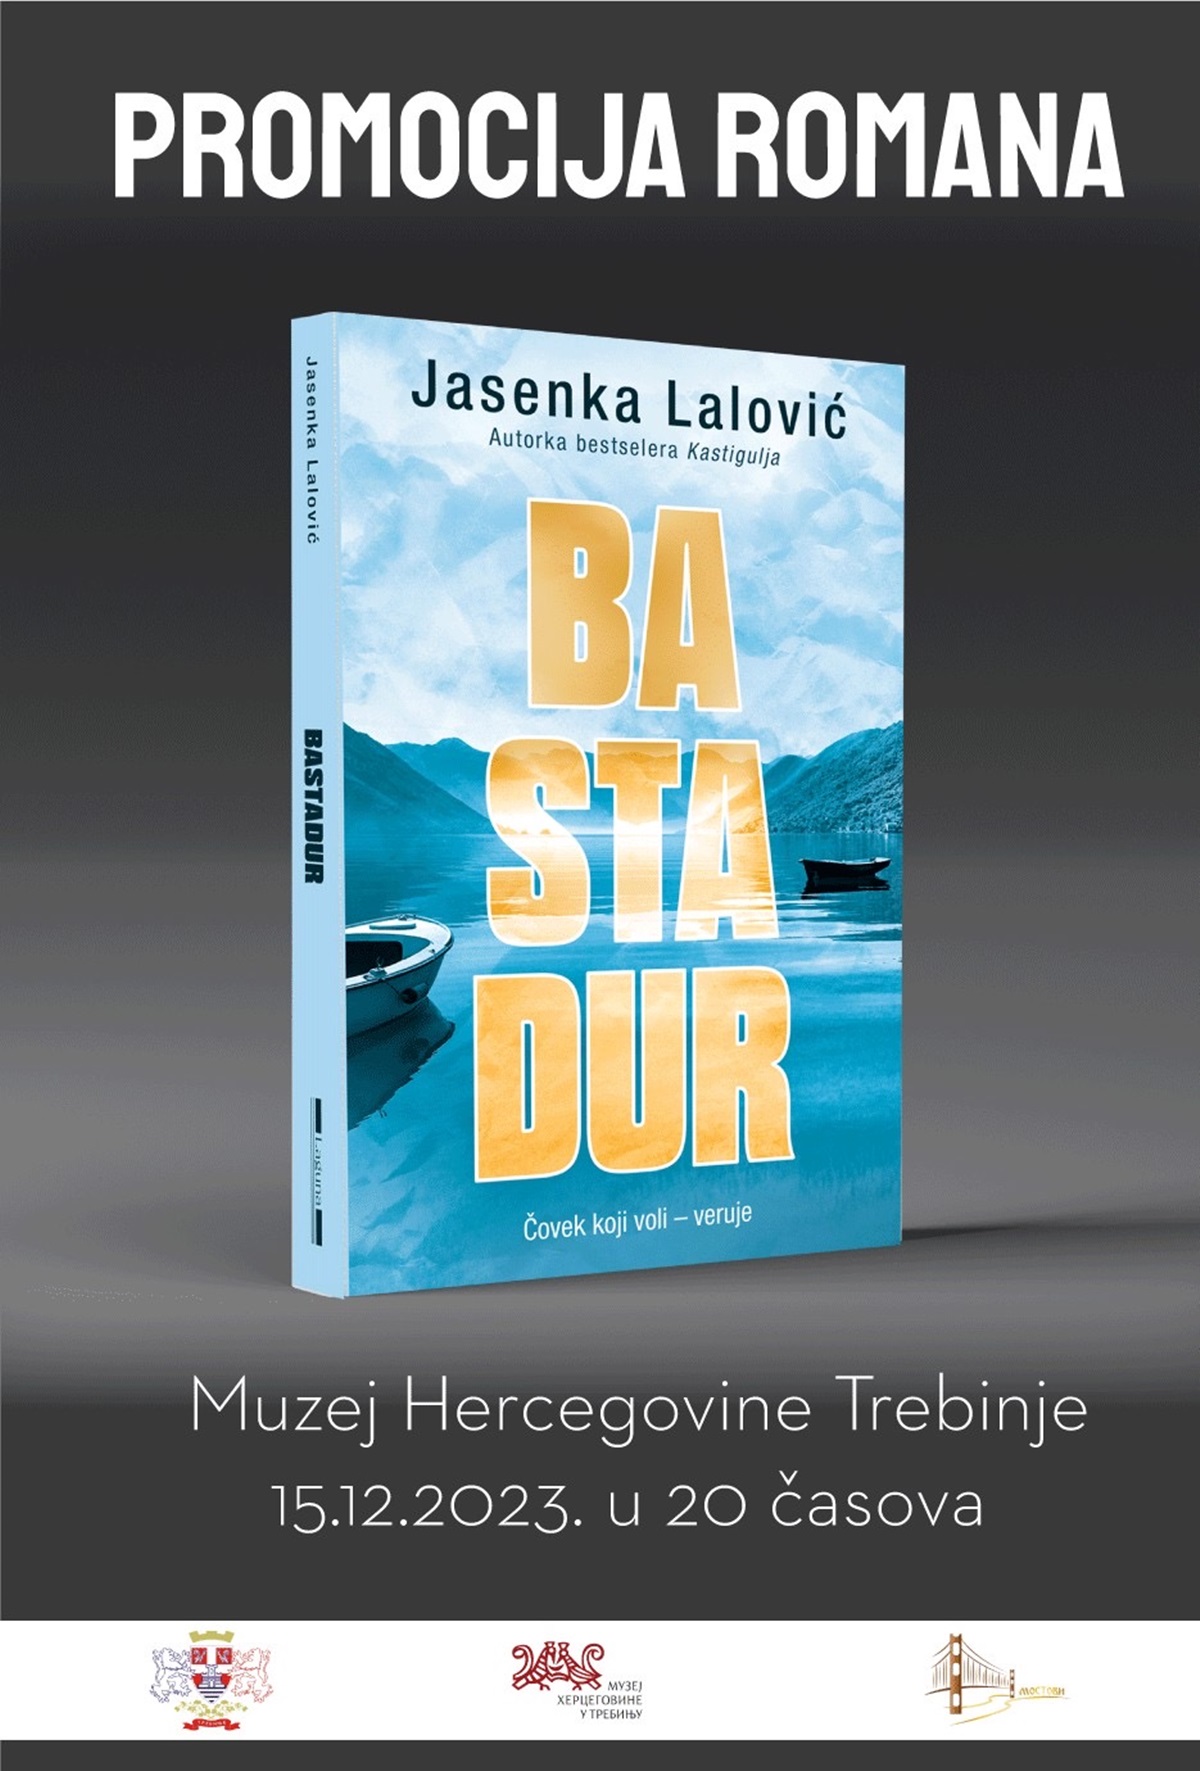 Muzej Hercegovine: Sutra promocija knjige „Bastadur“